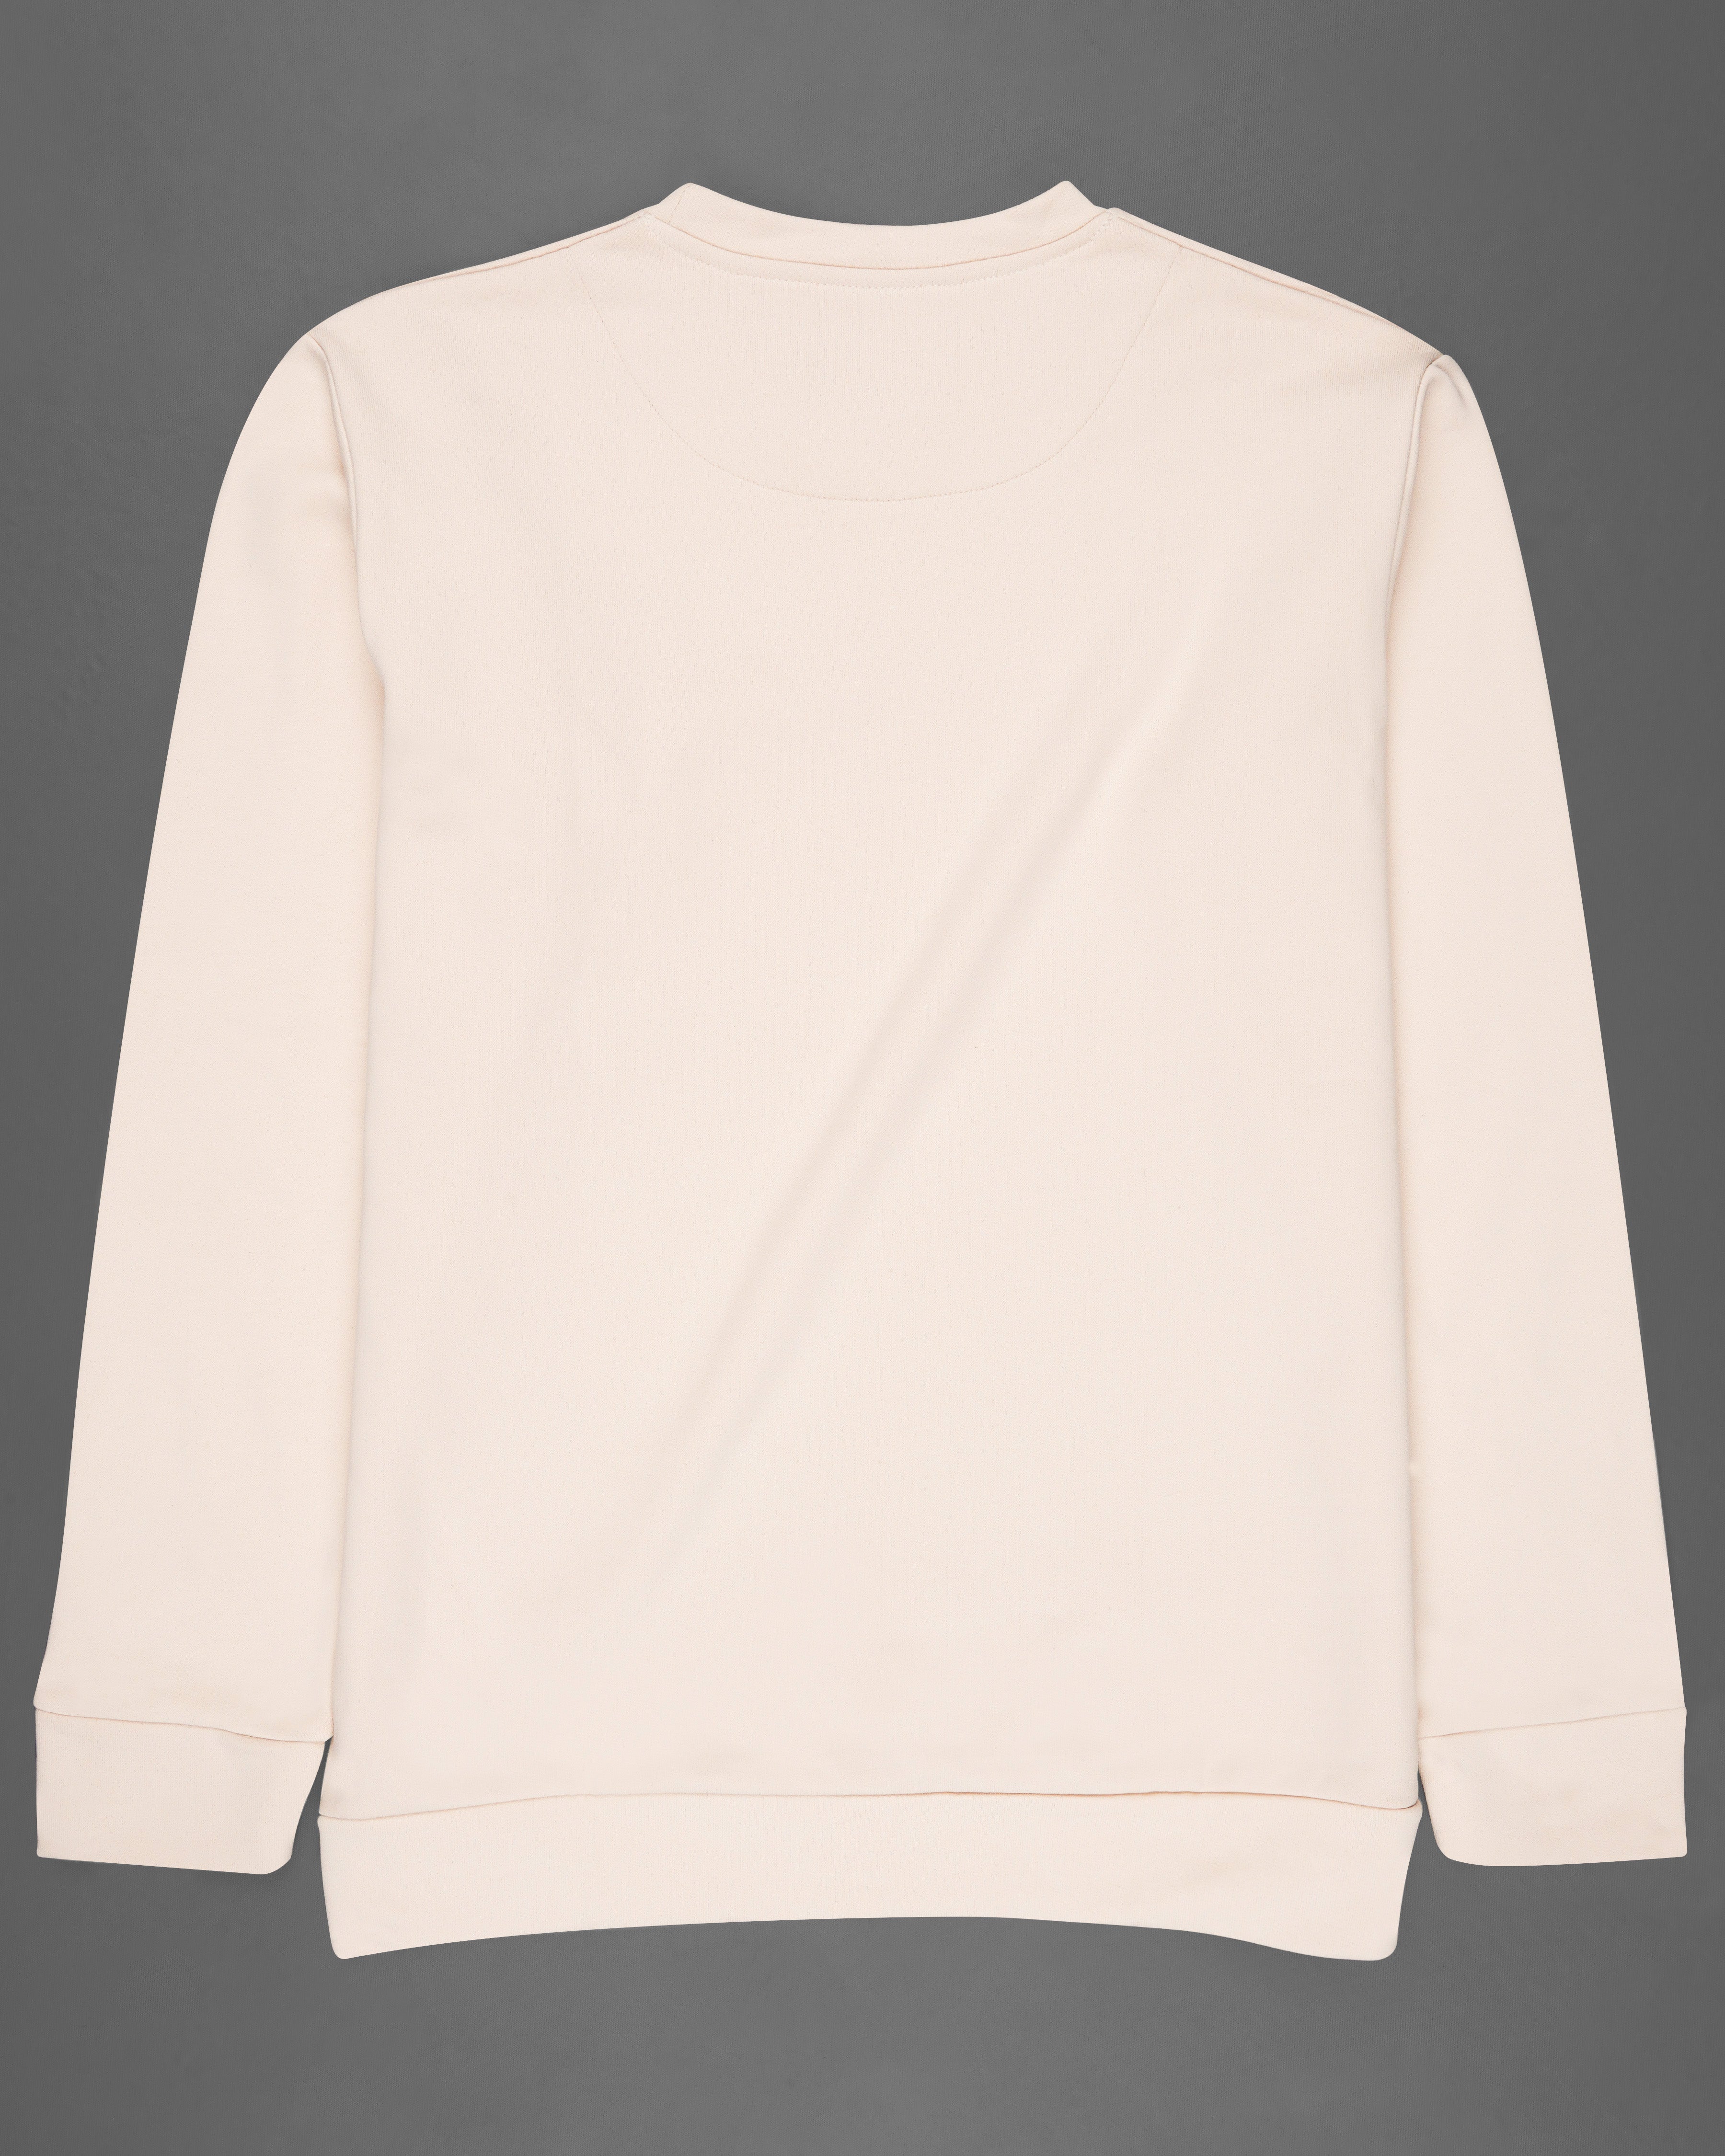 Bizarre Cream Premium Cotton Sweatshirt with Shorts Combo TS621-SR183-S, TS621-SR183-M, TS621-SR183-L, TS621-SR183-XL, TS621-SR183-XXL